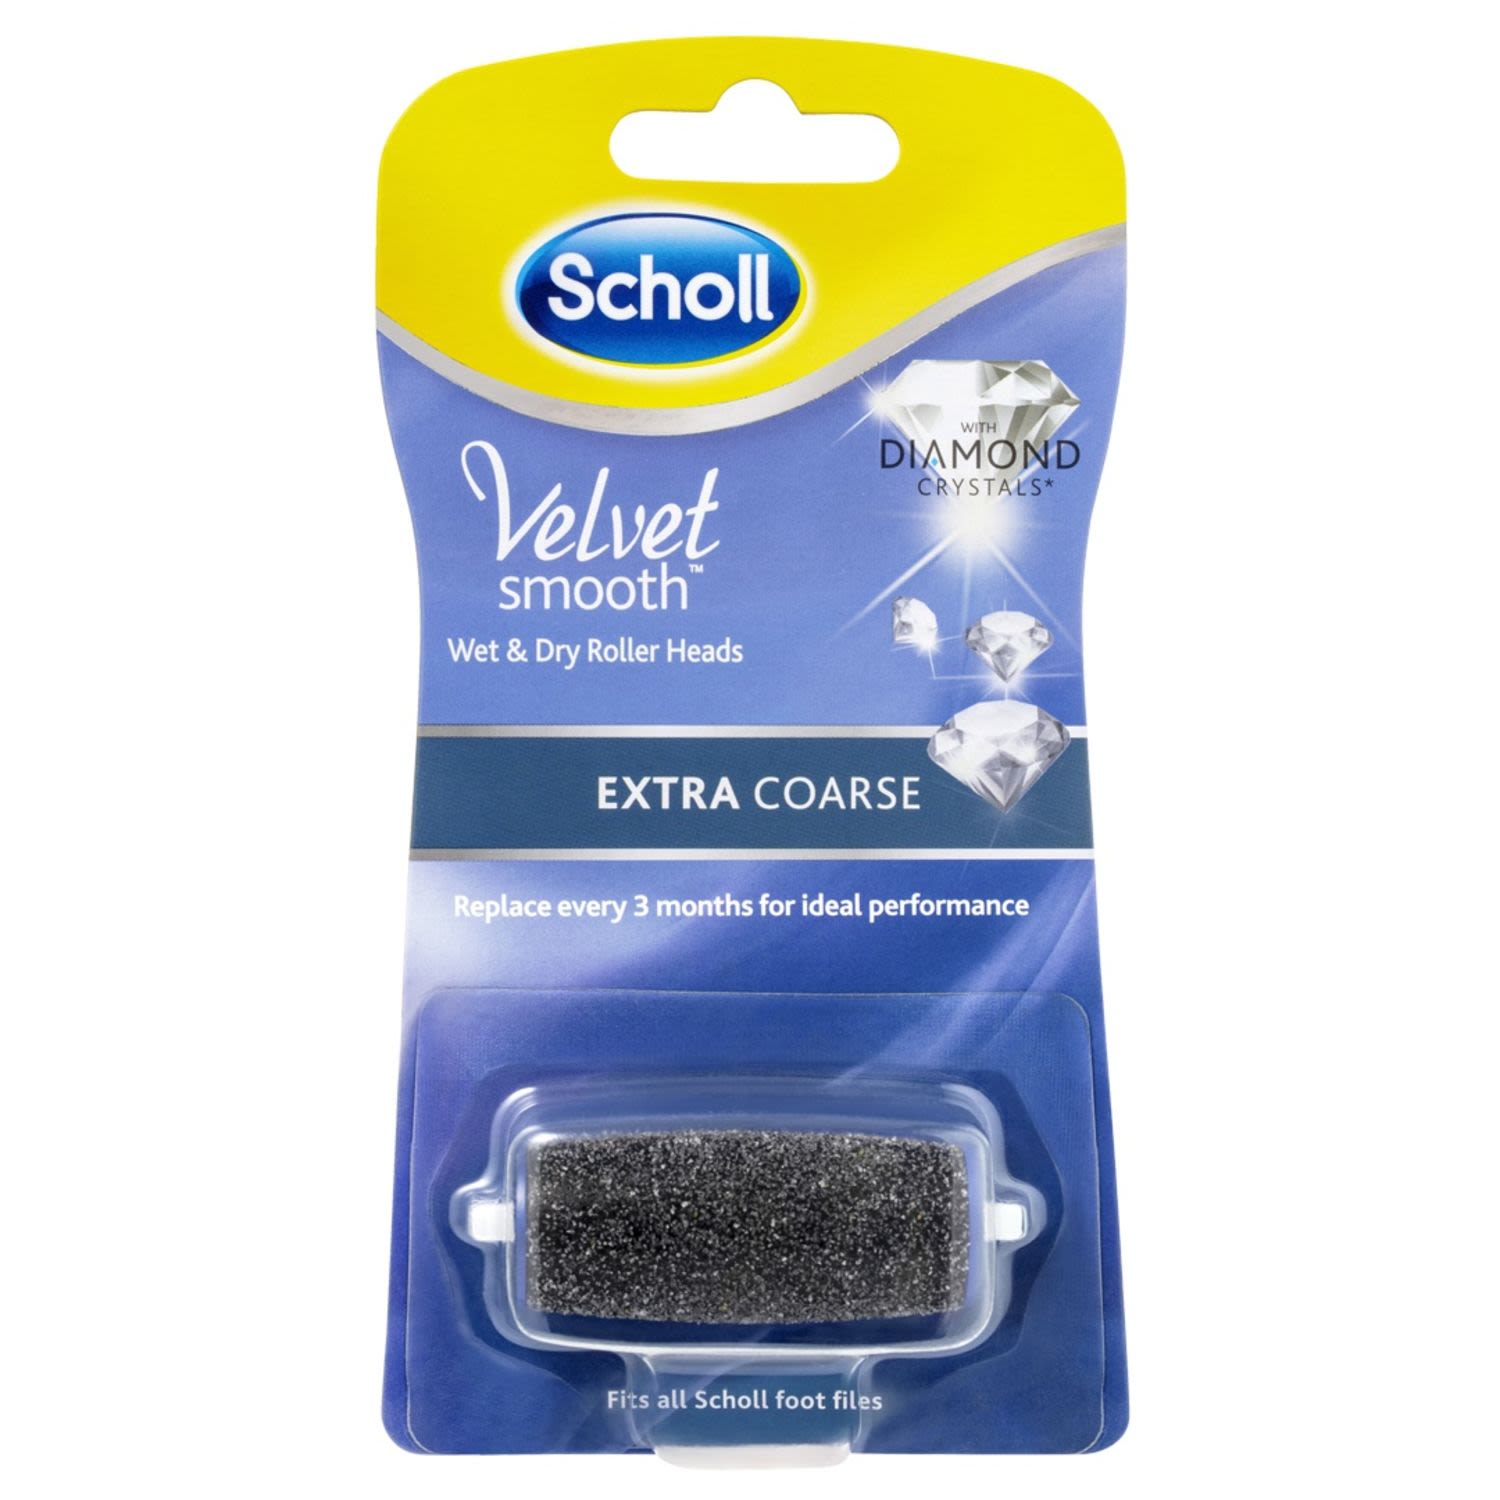 Scholl Velvet Smooth Wet & Dry Roller Heads Extra Coarse, 1 Each